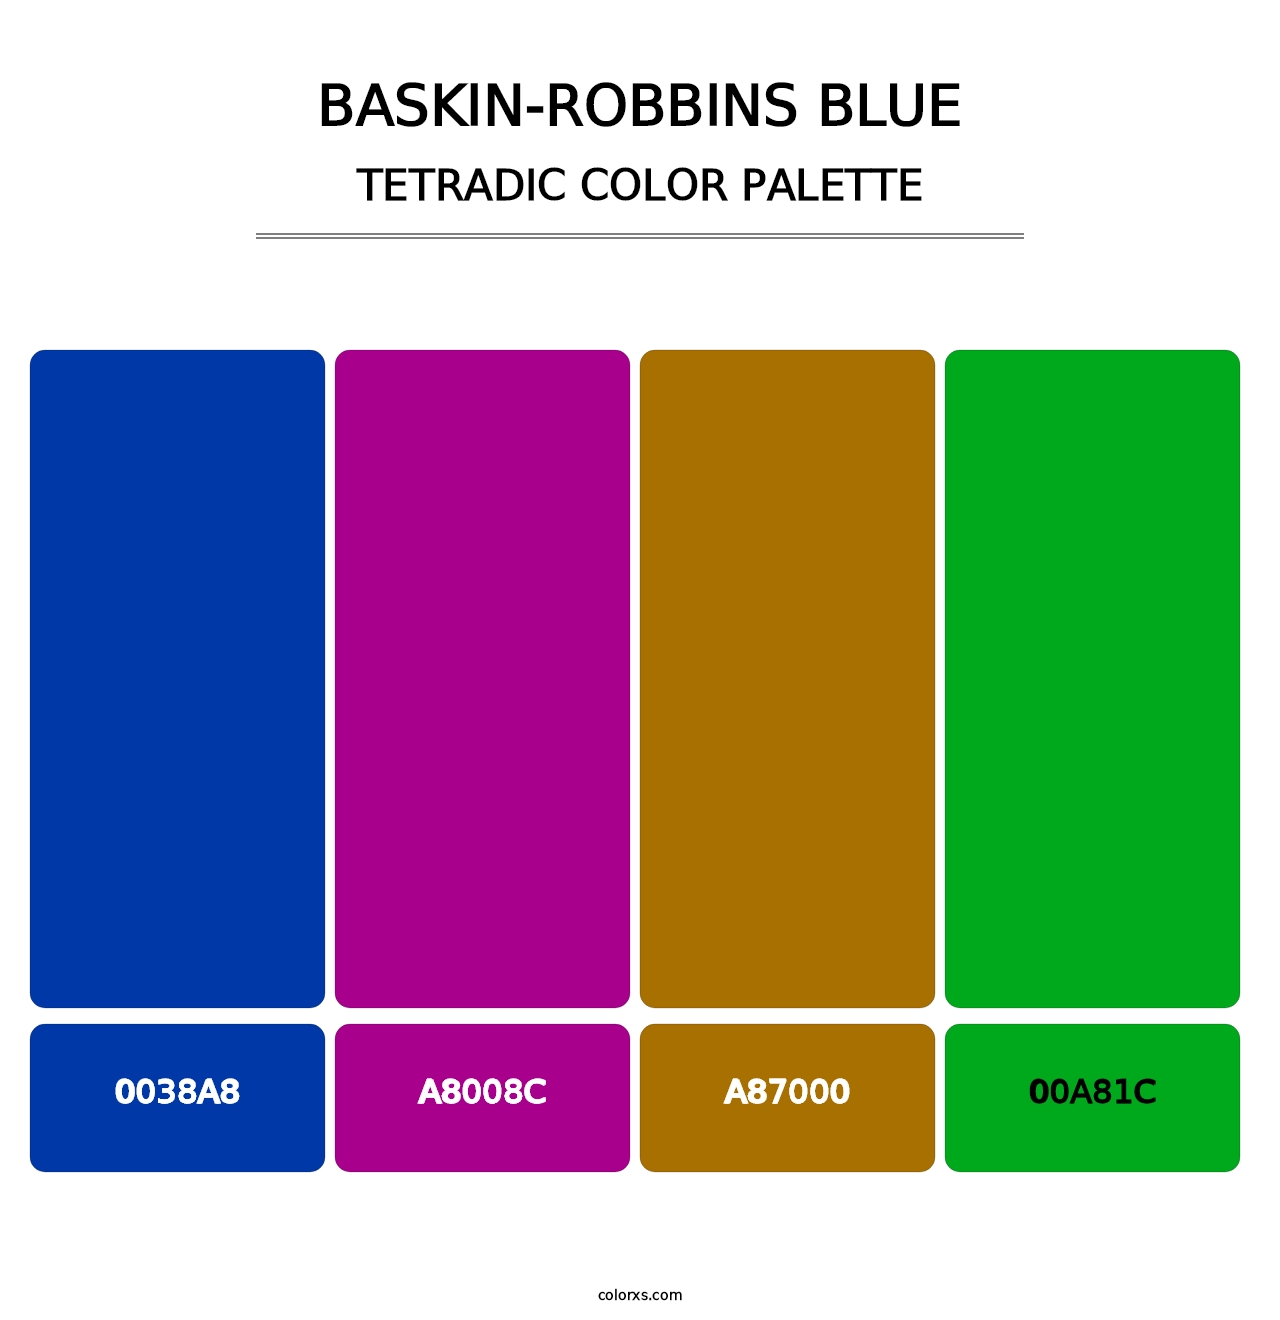 Baskin-Robbins Blue - Tetradic Color Palette